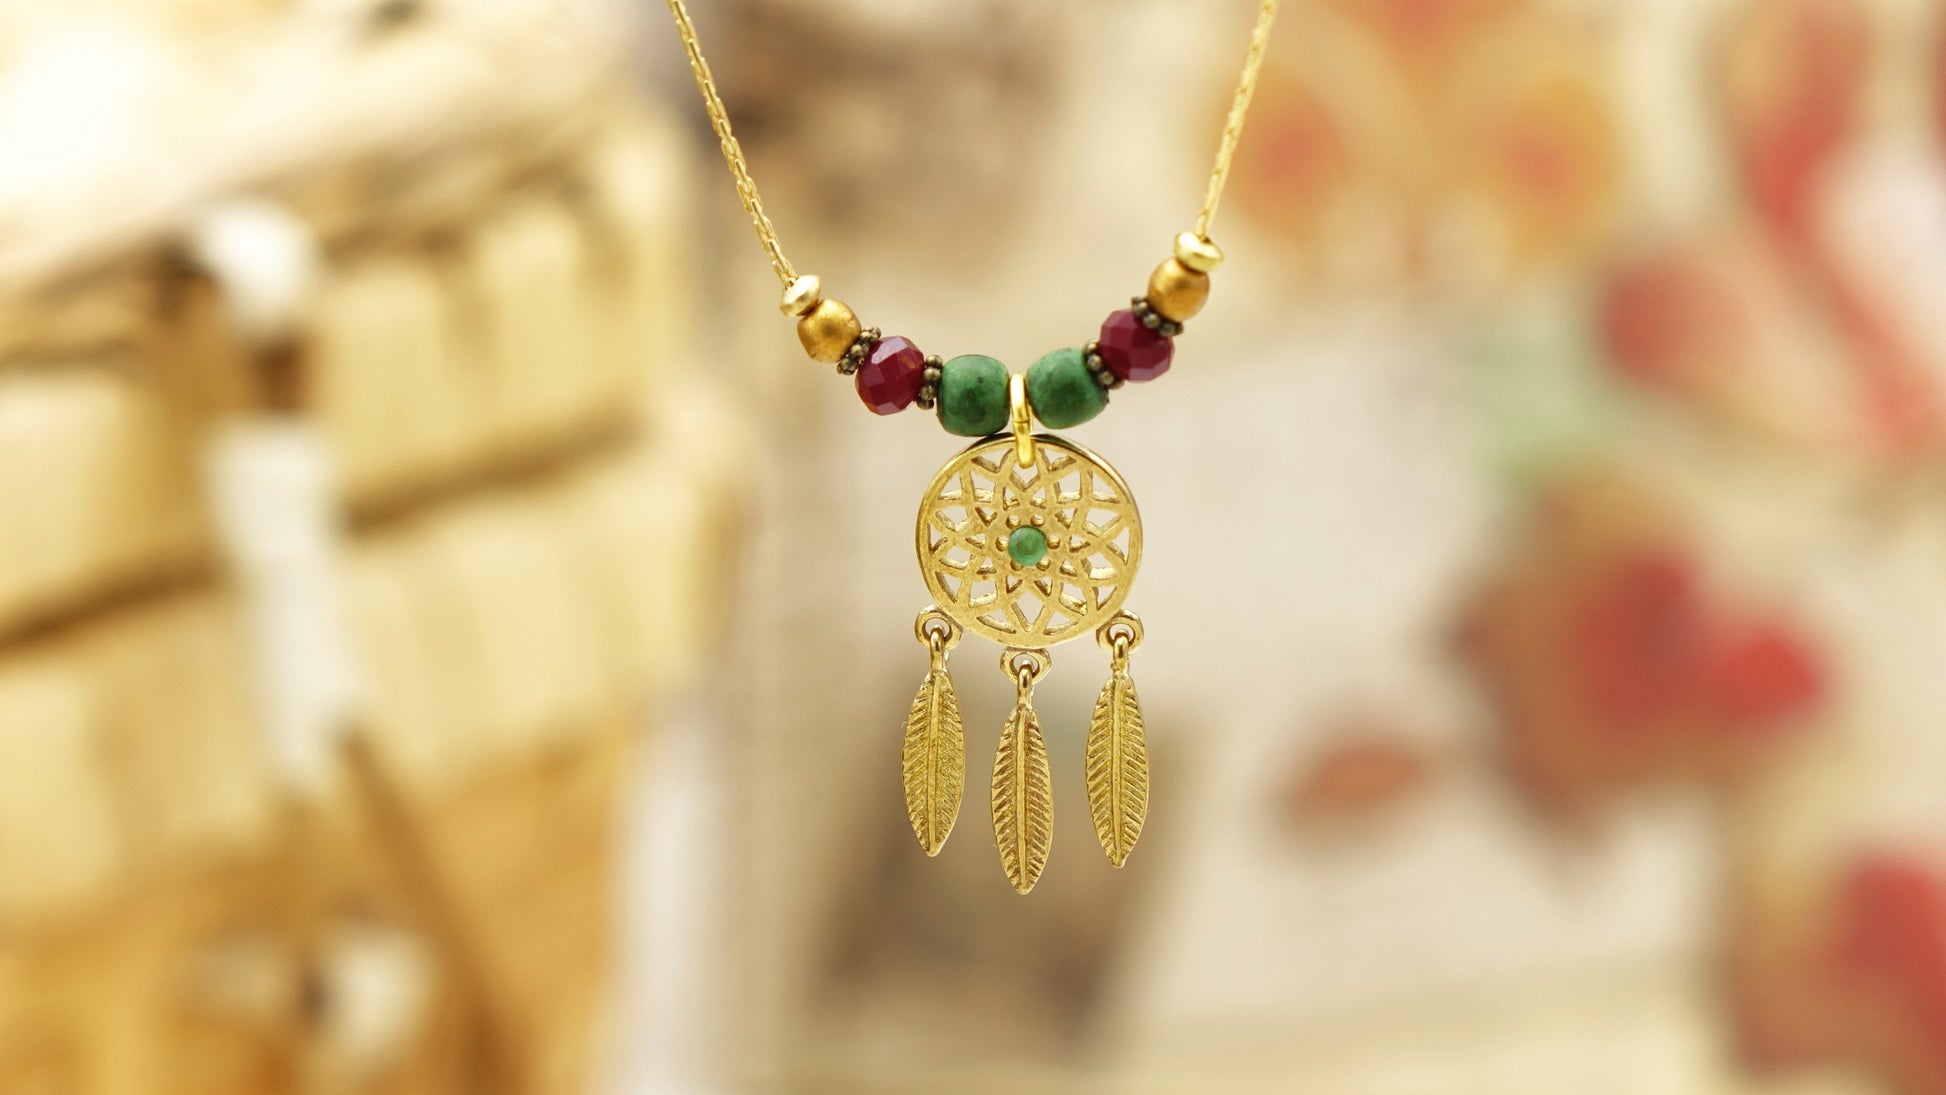 Boho Dreamcatcher Necklace - Verna Artisan Works